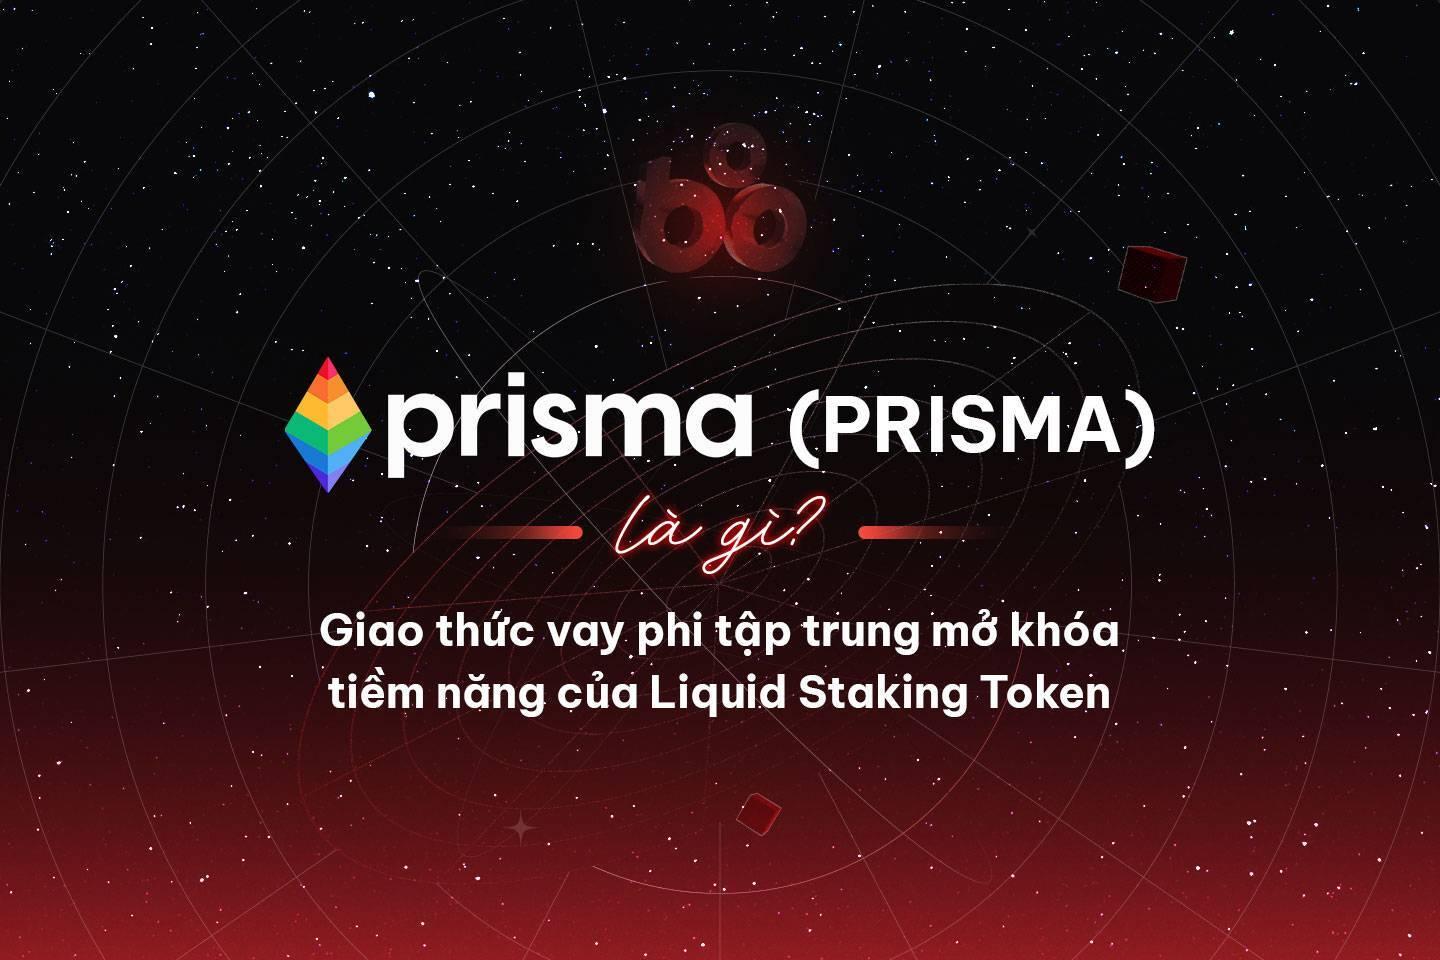 prisma-finance-prisma-la-gi-giao-thuc-vay-phi-tap-trung-mo-khoa-tiem-nang-cua-liquid-staking-token